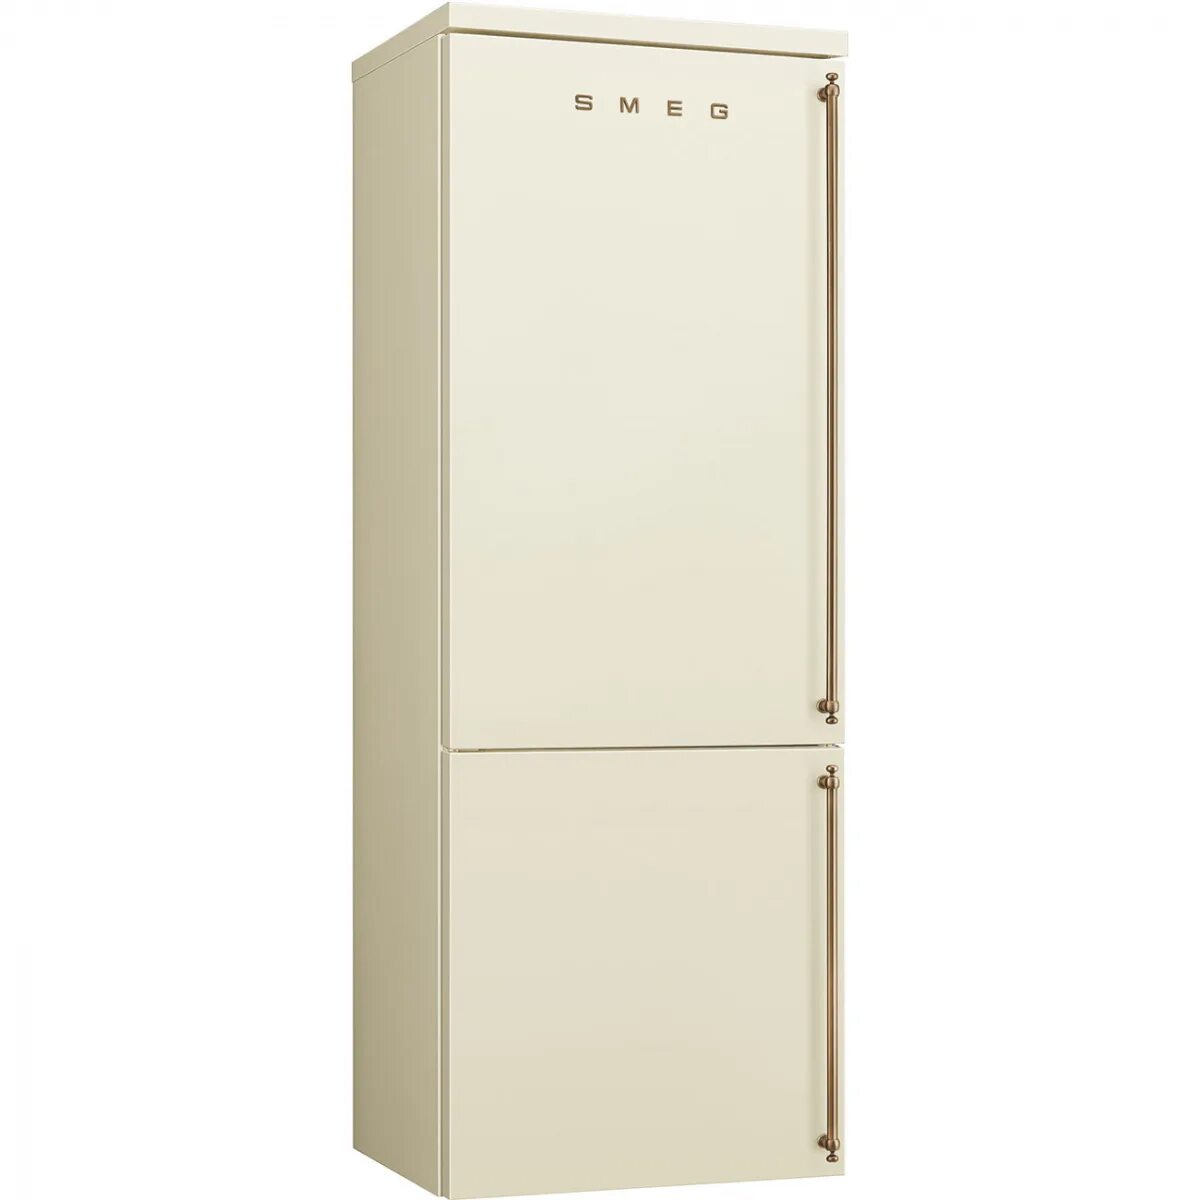 Холодильник Sharp SJ-xe59pmwh. Холодильник Smeg fa8003pos. Sharp SJ-xe55pmbe. Холодильники Smeg fa860p. Холодильник слоновая кость